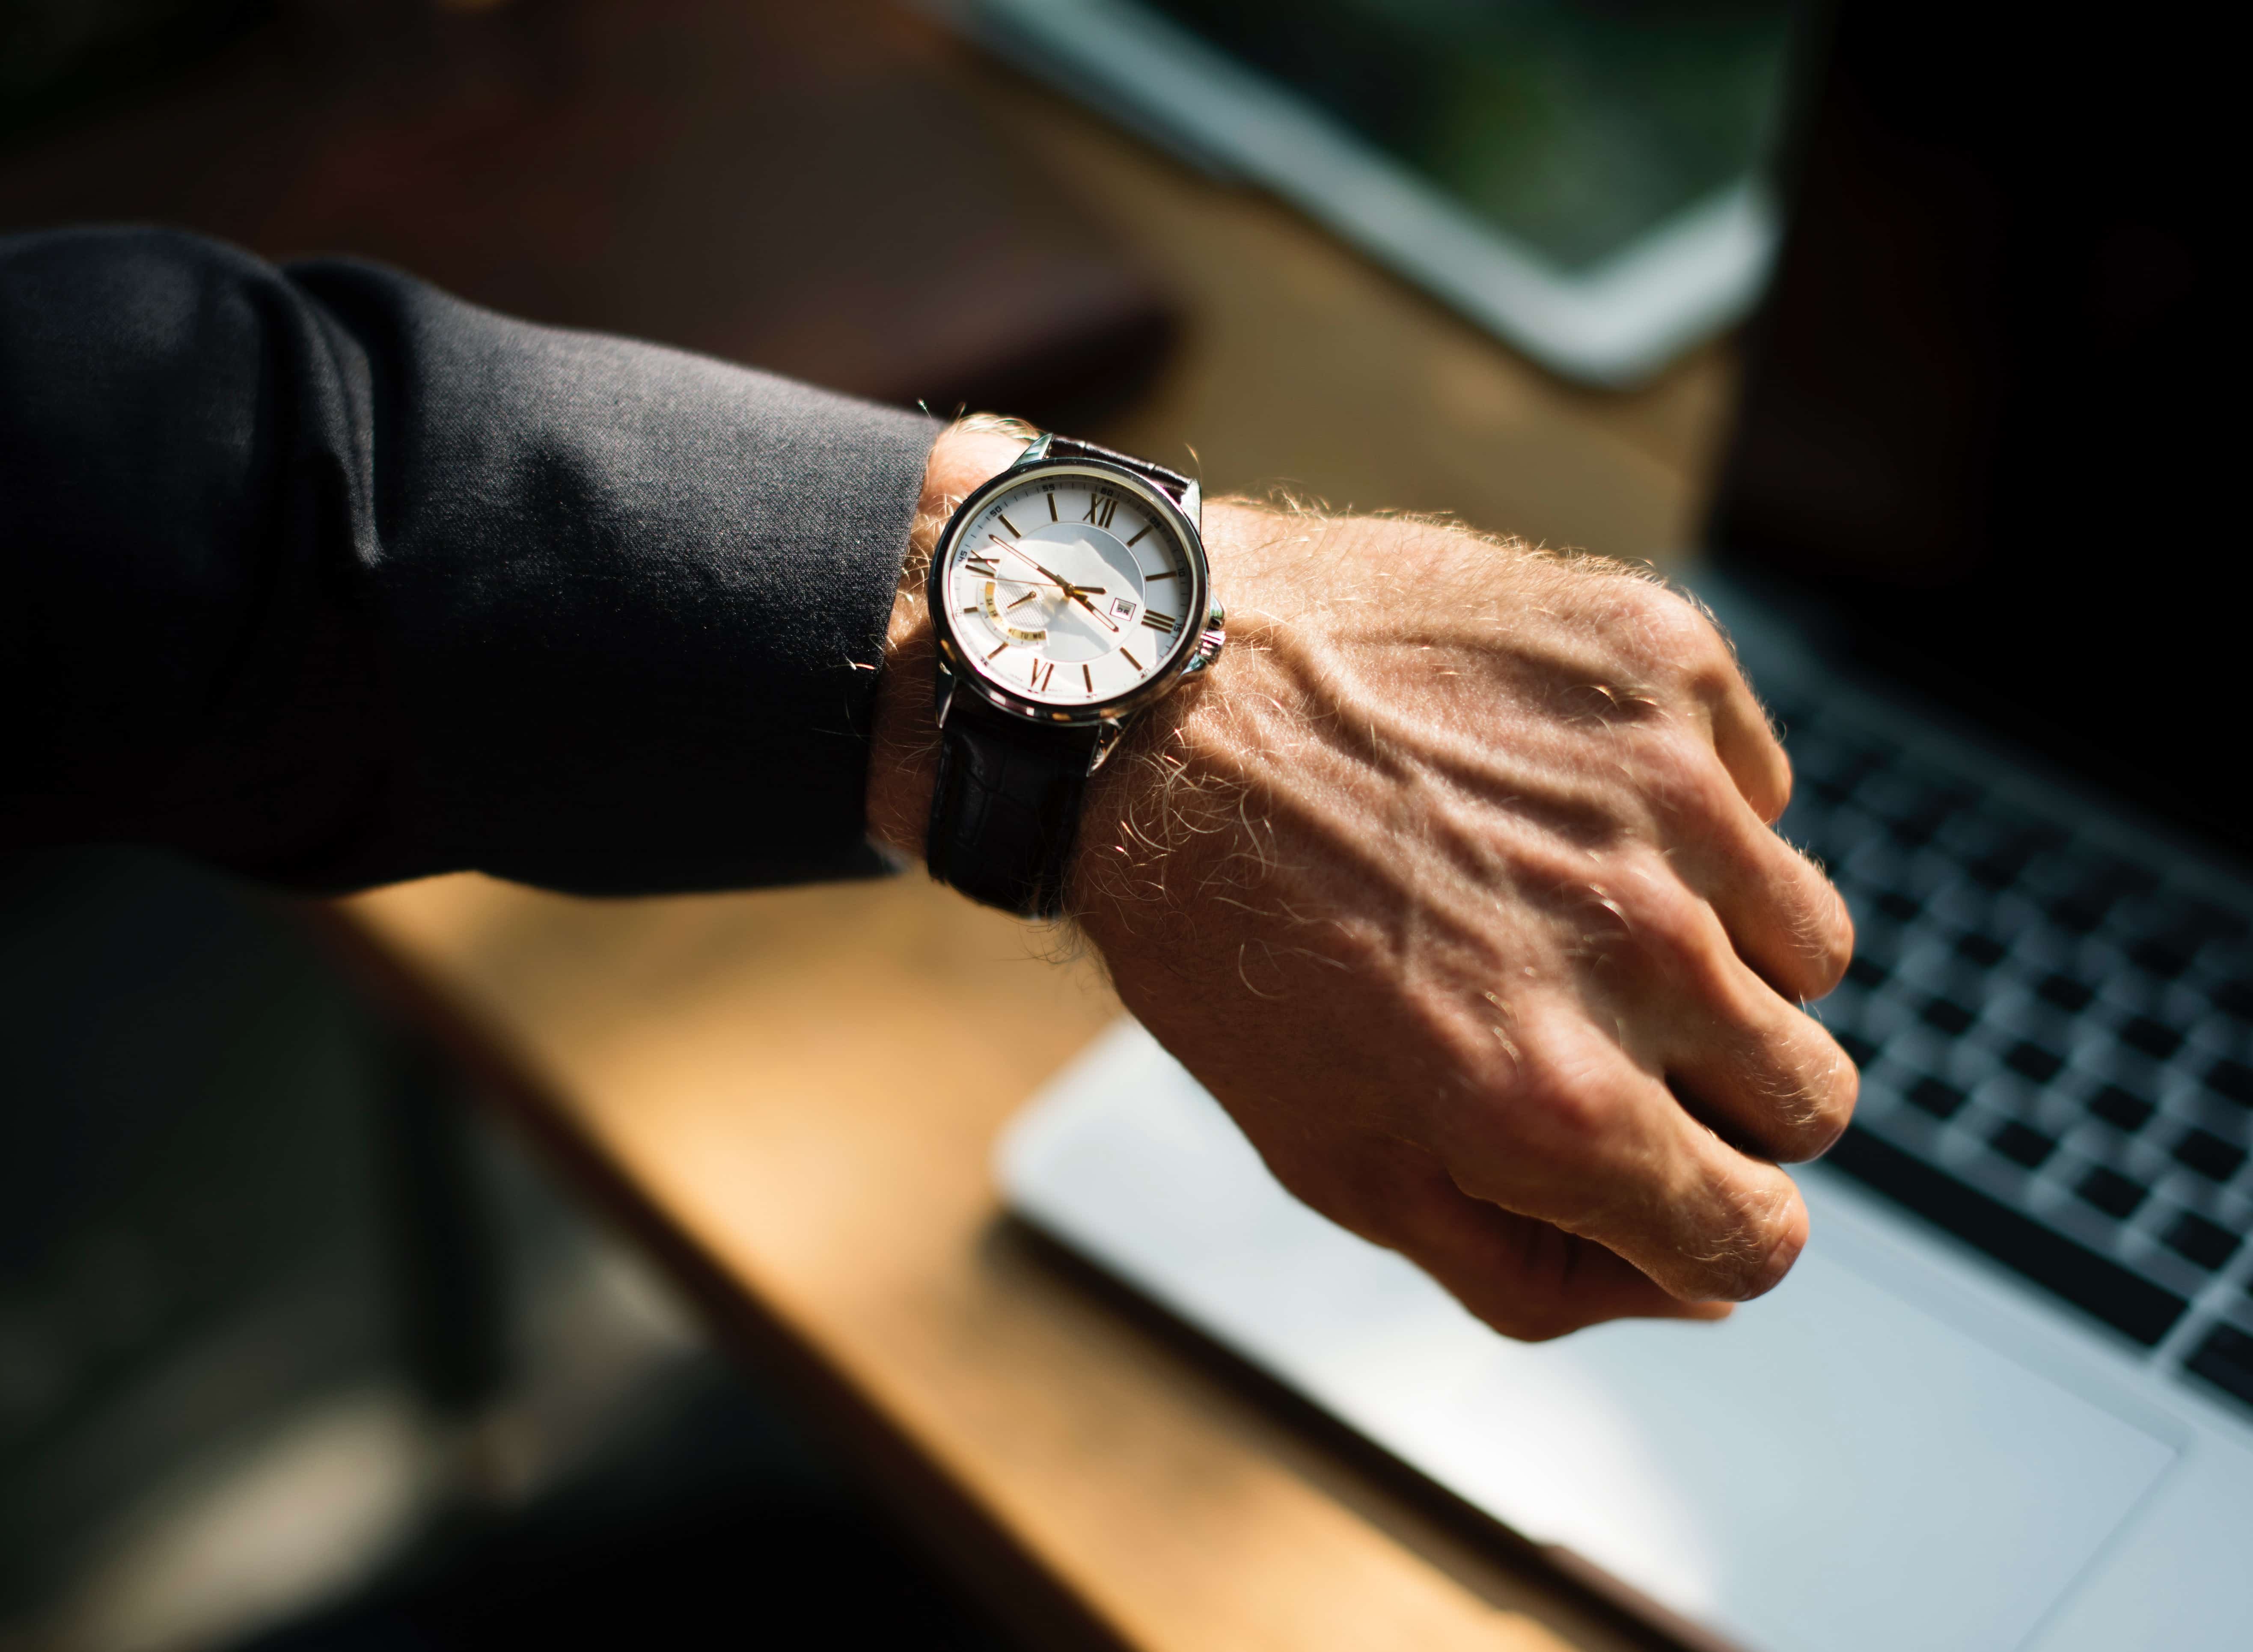 wrist watch worn by a corporate man